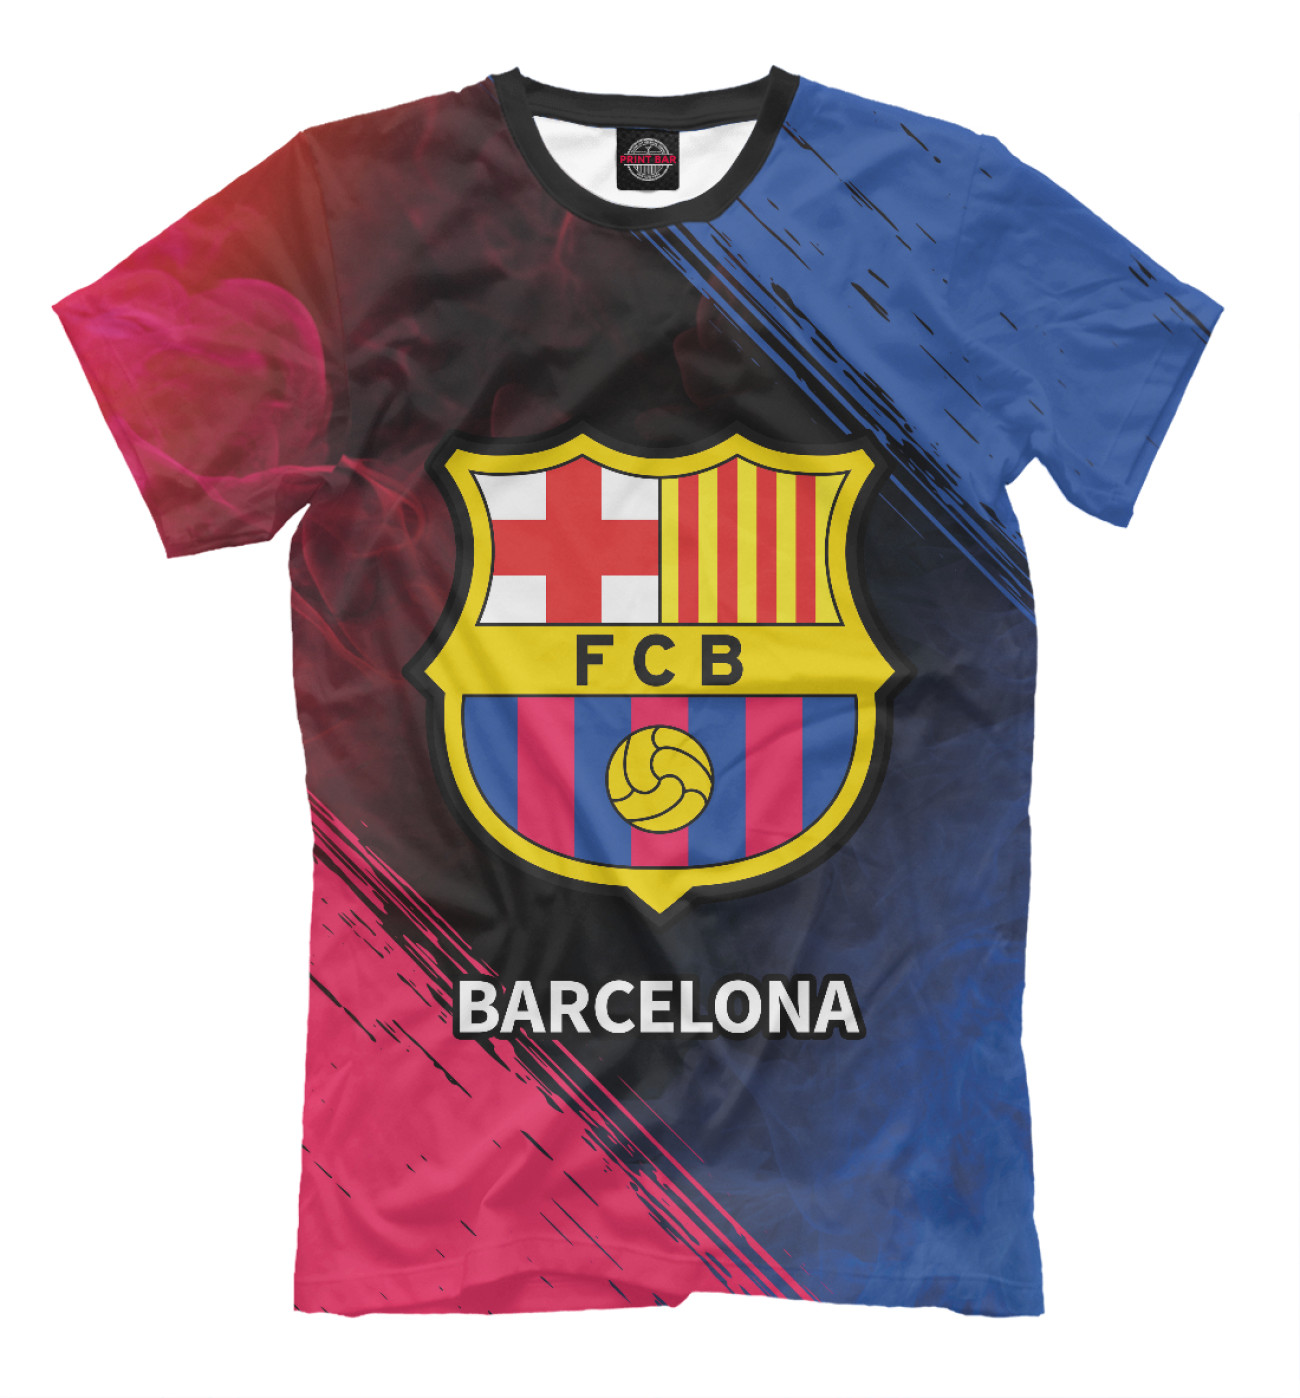 Мужская Футболка Barcelona / Барселона, артикул: BAR-460012-fut-2